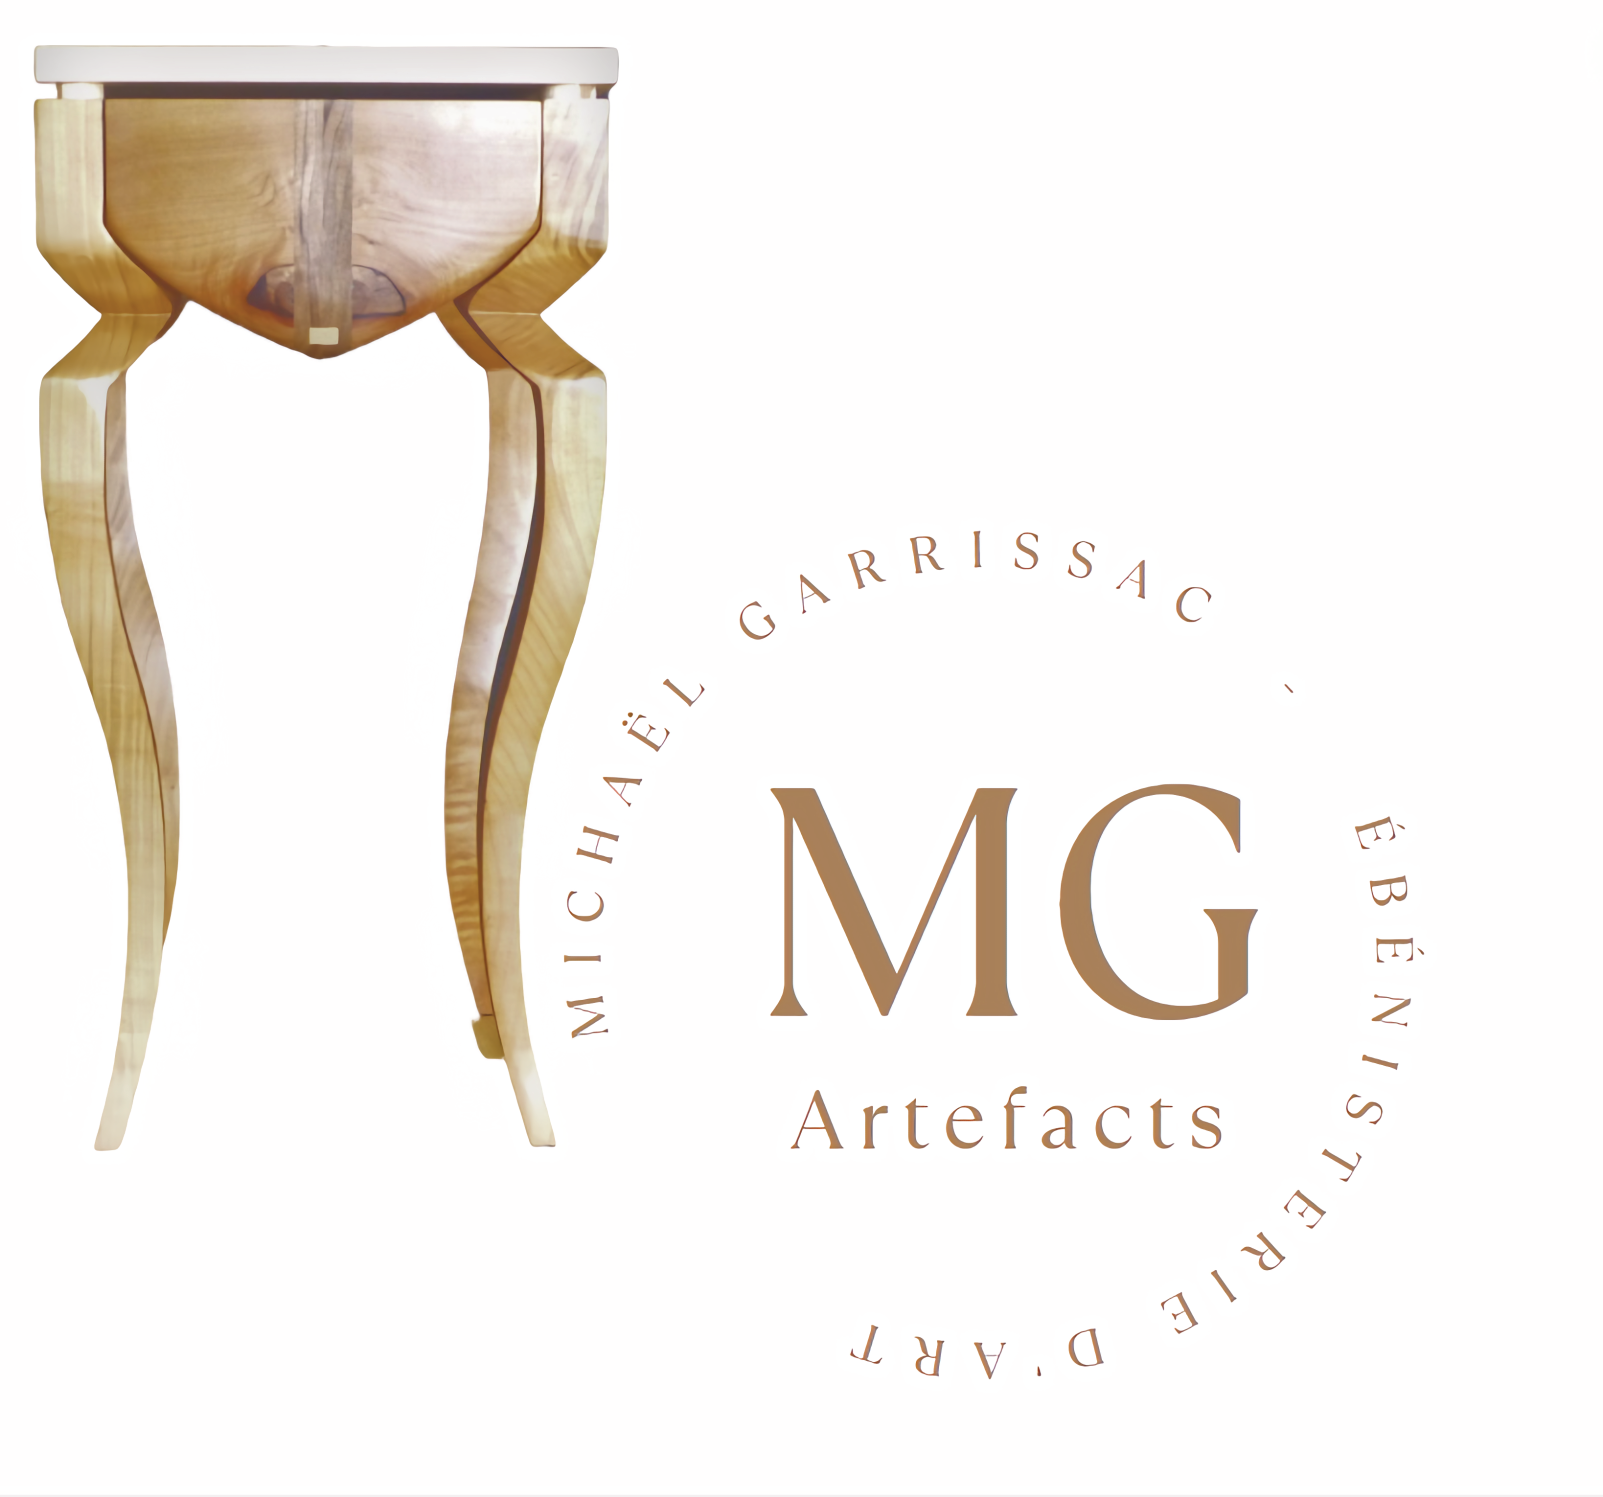 MG - Artefacts